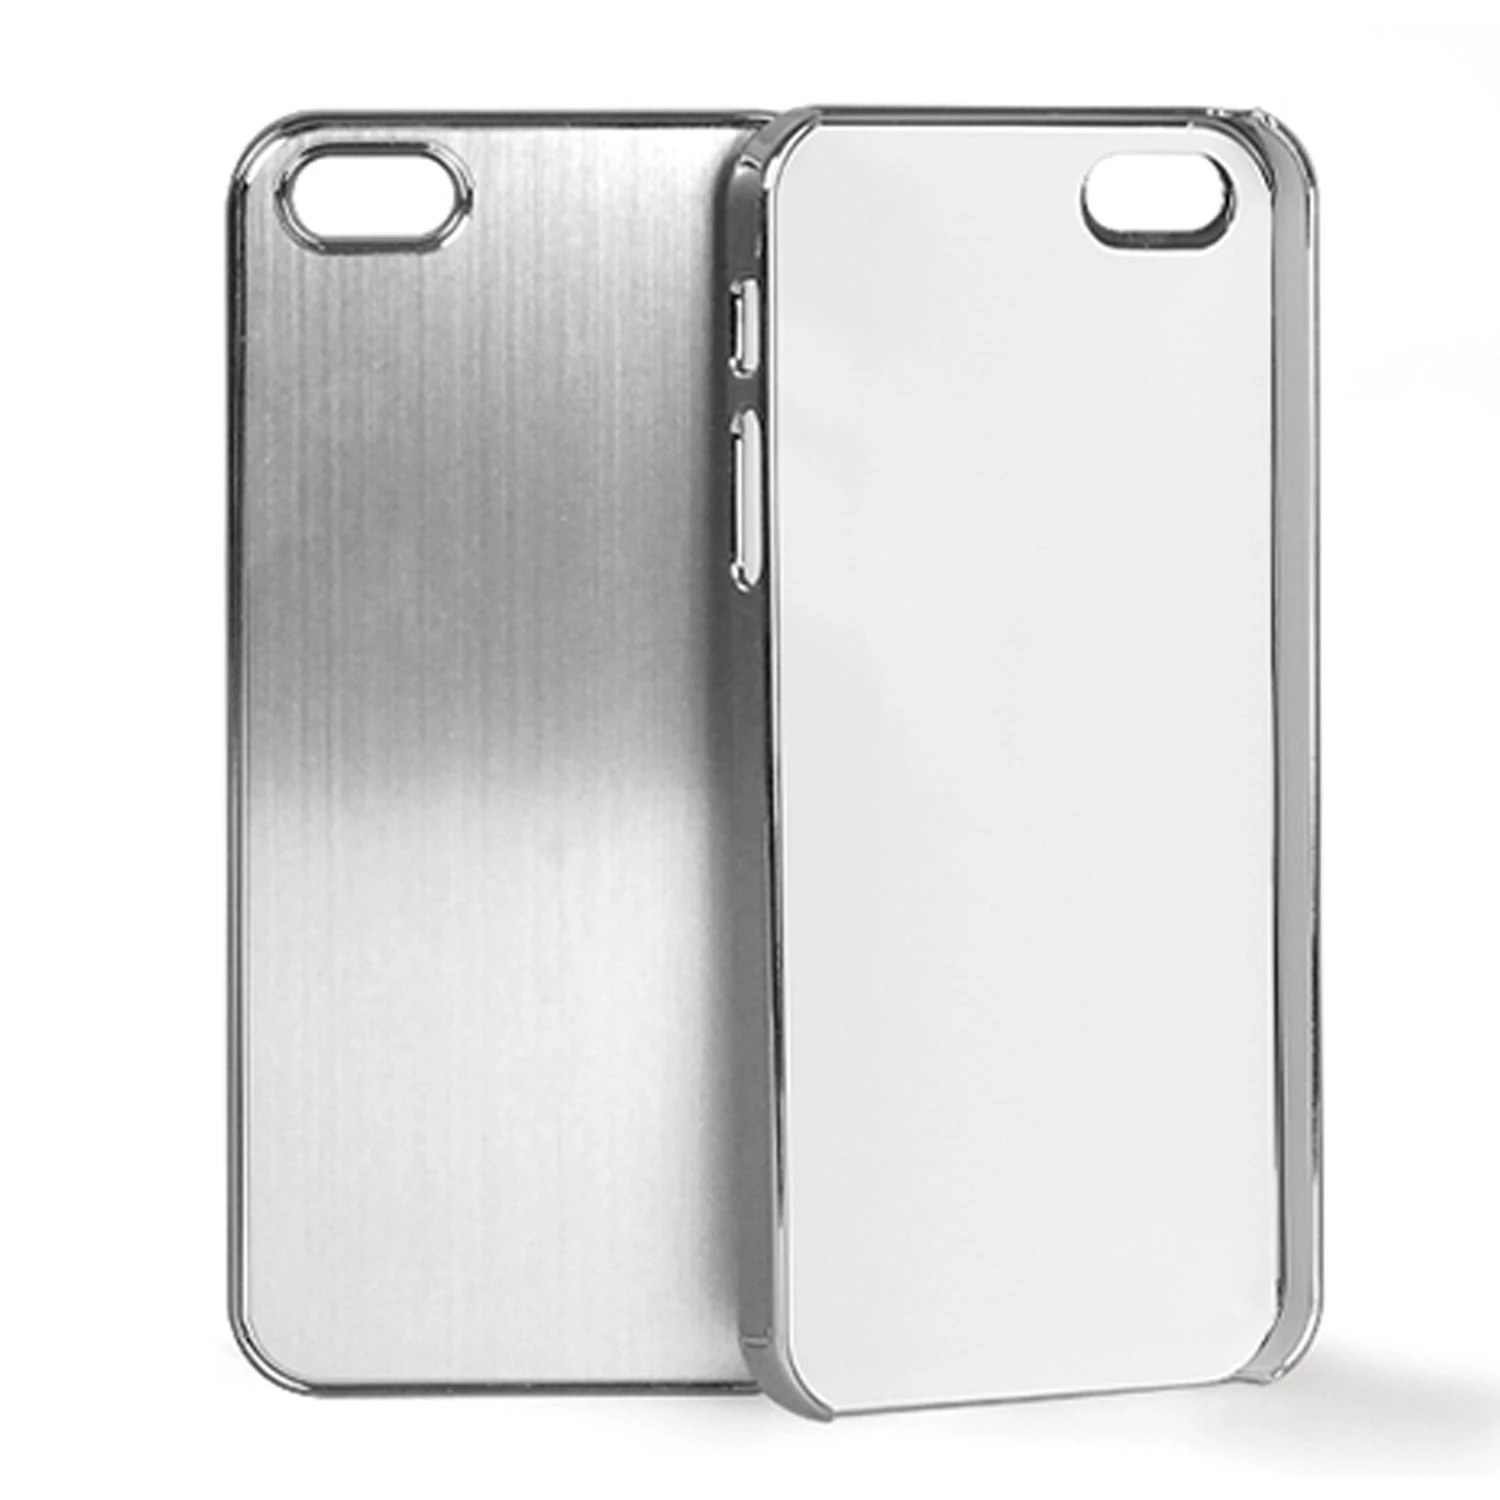 Metal Aluminum Chrome Hard Case For Iphone 5